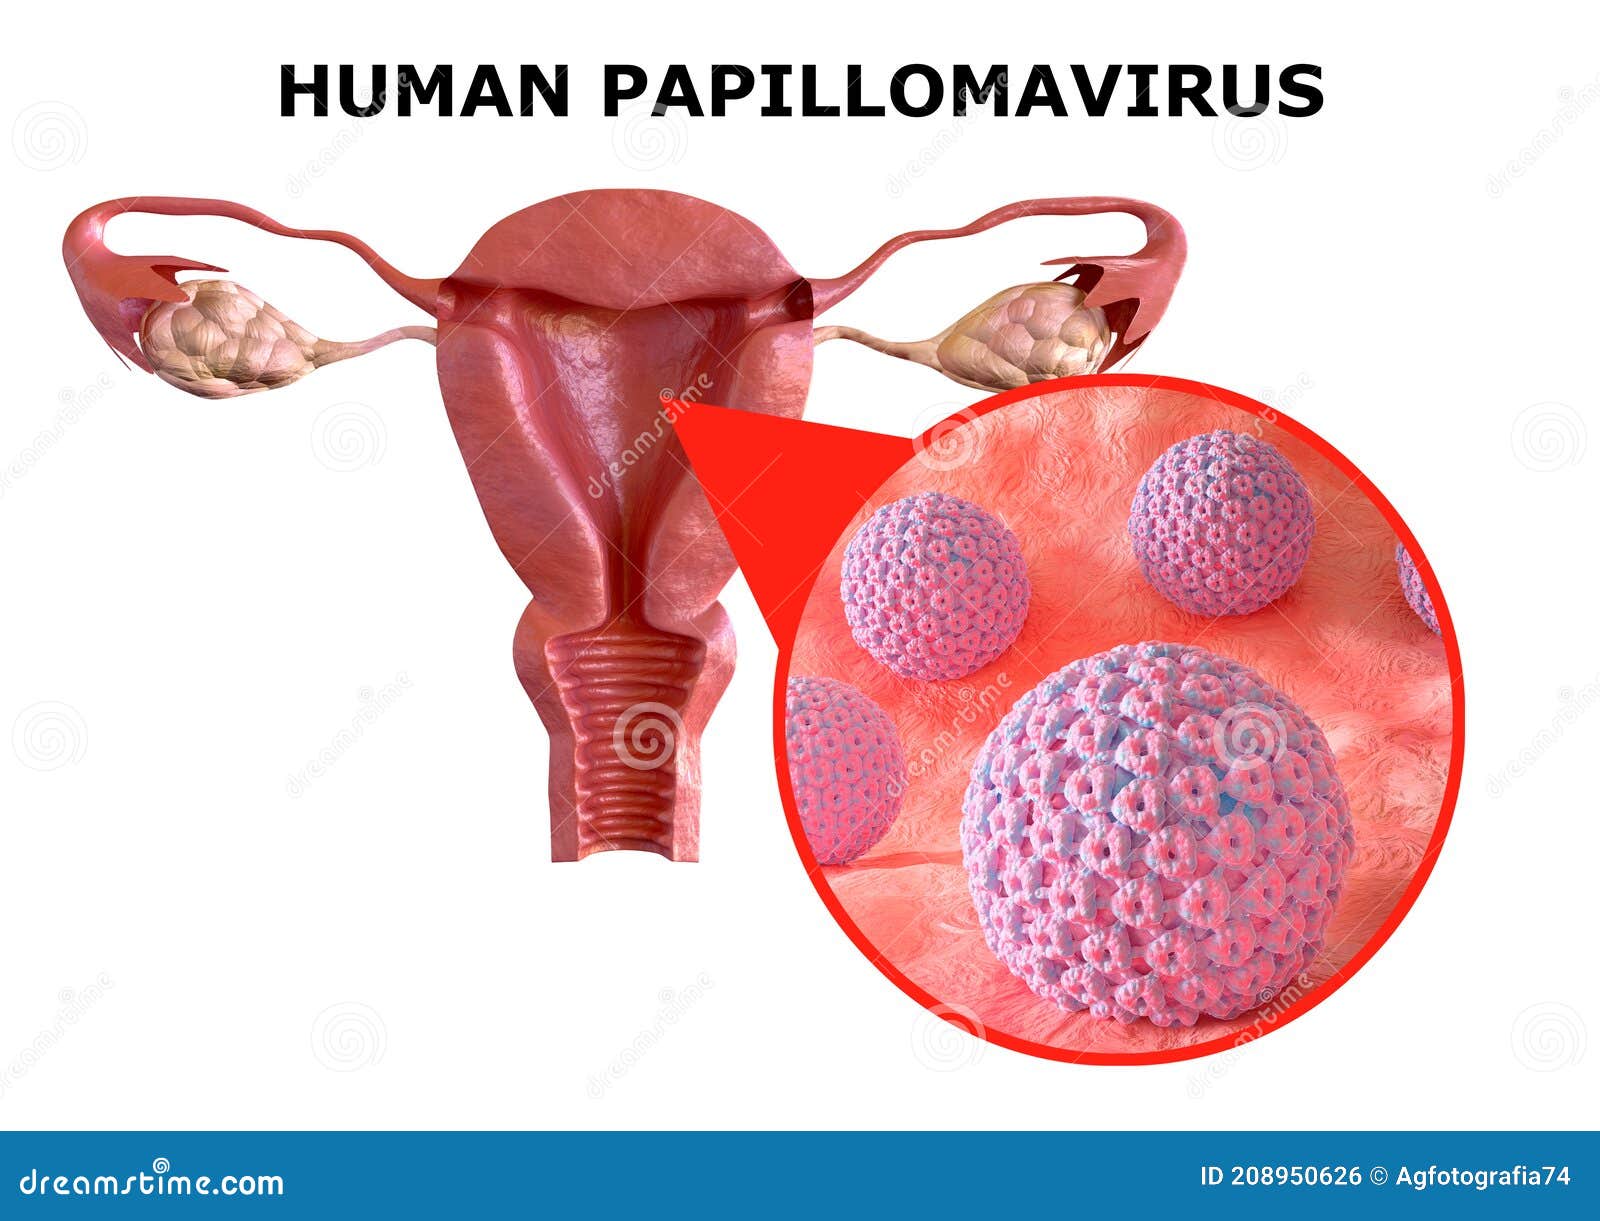 genital warts or human papillomavirus hpv)